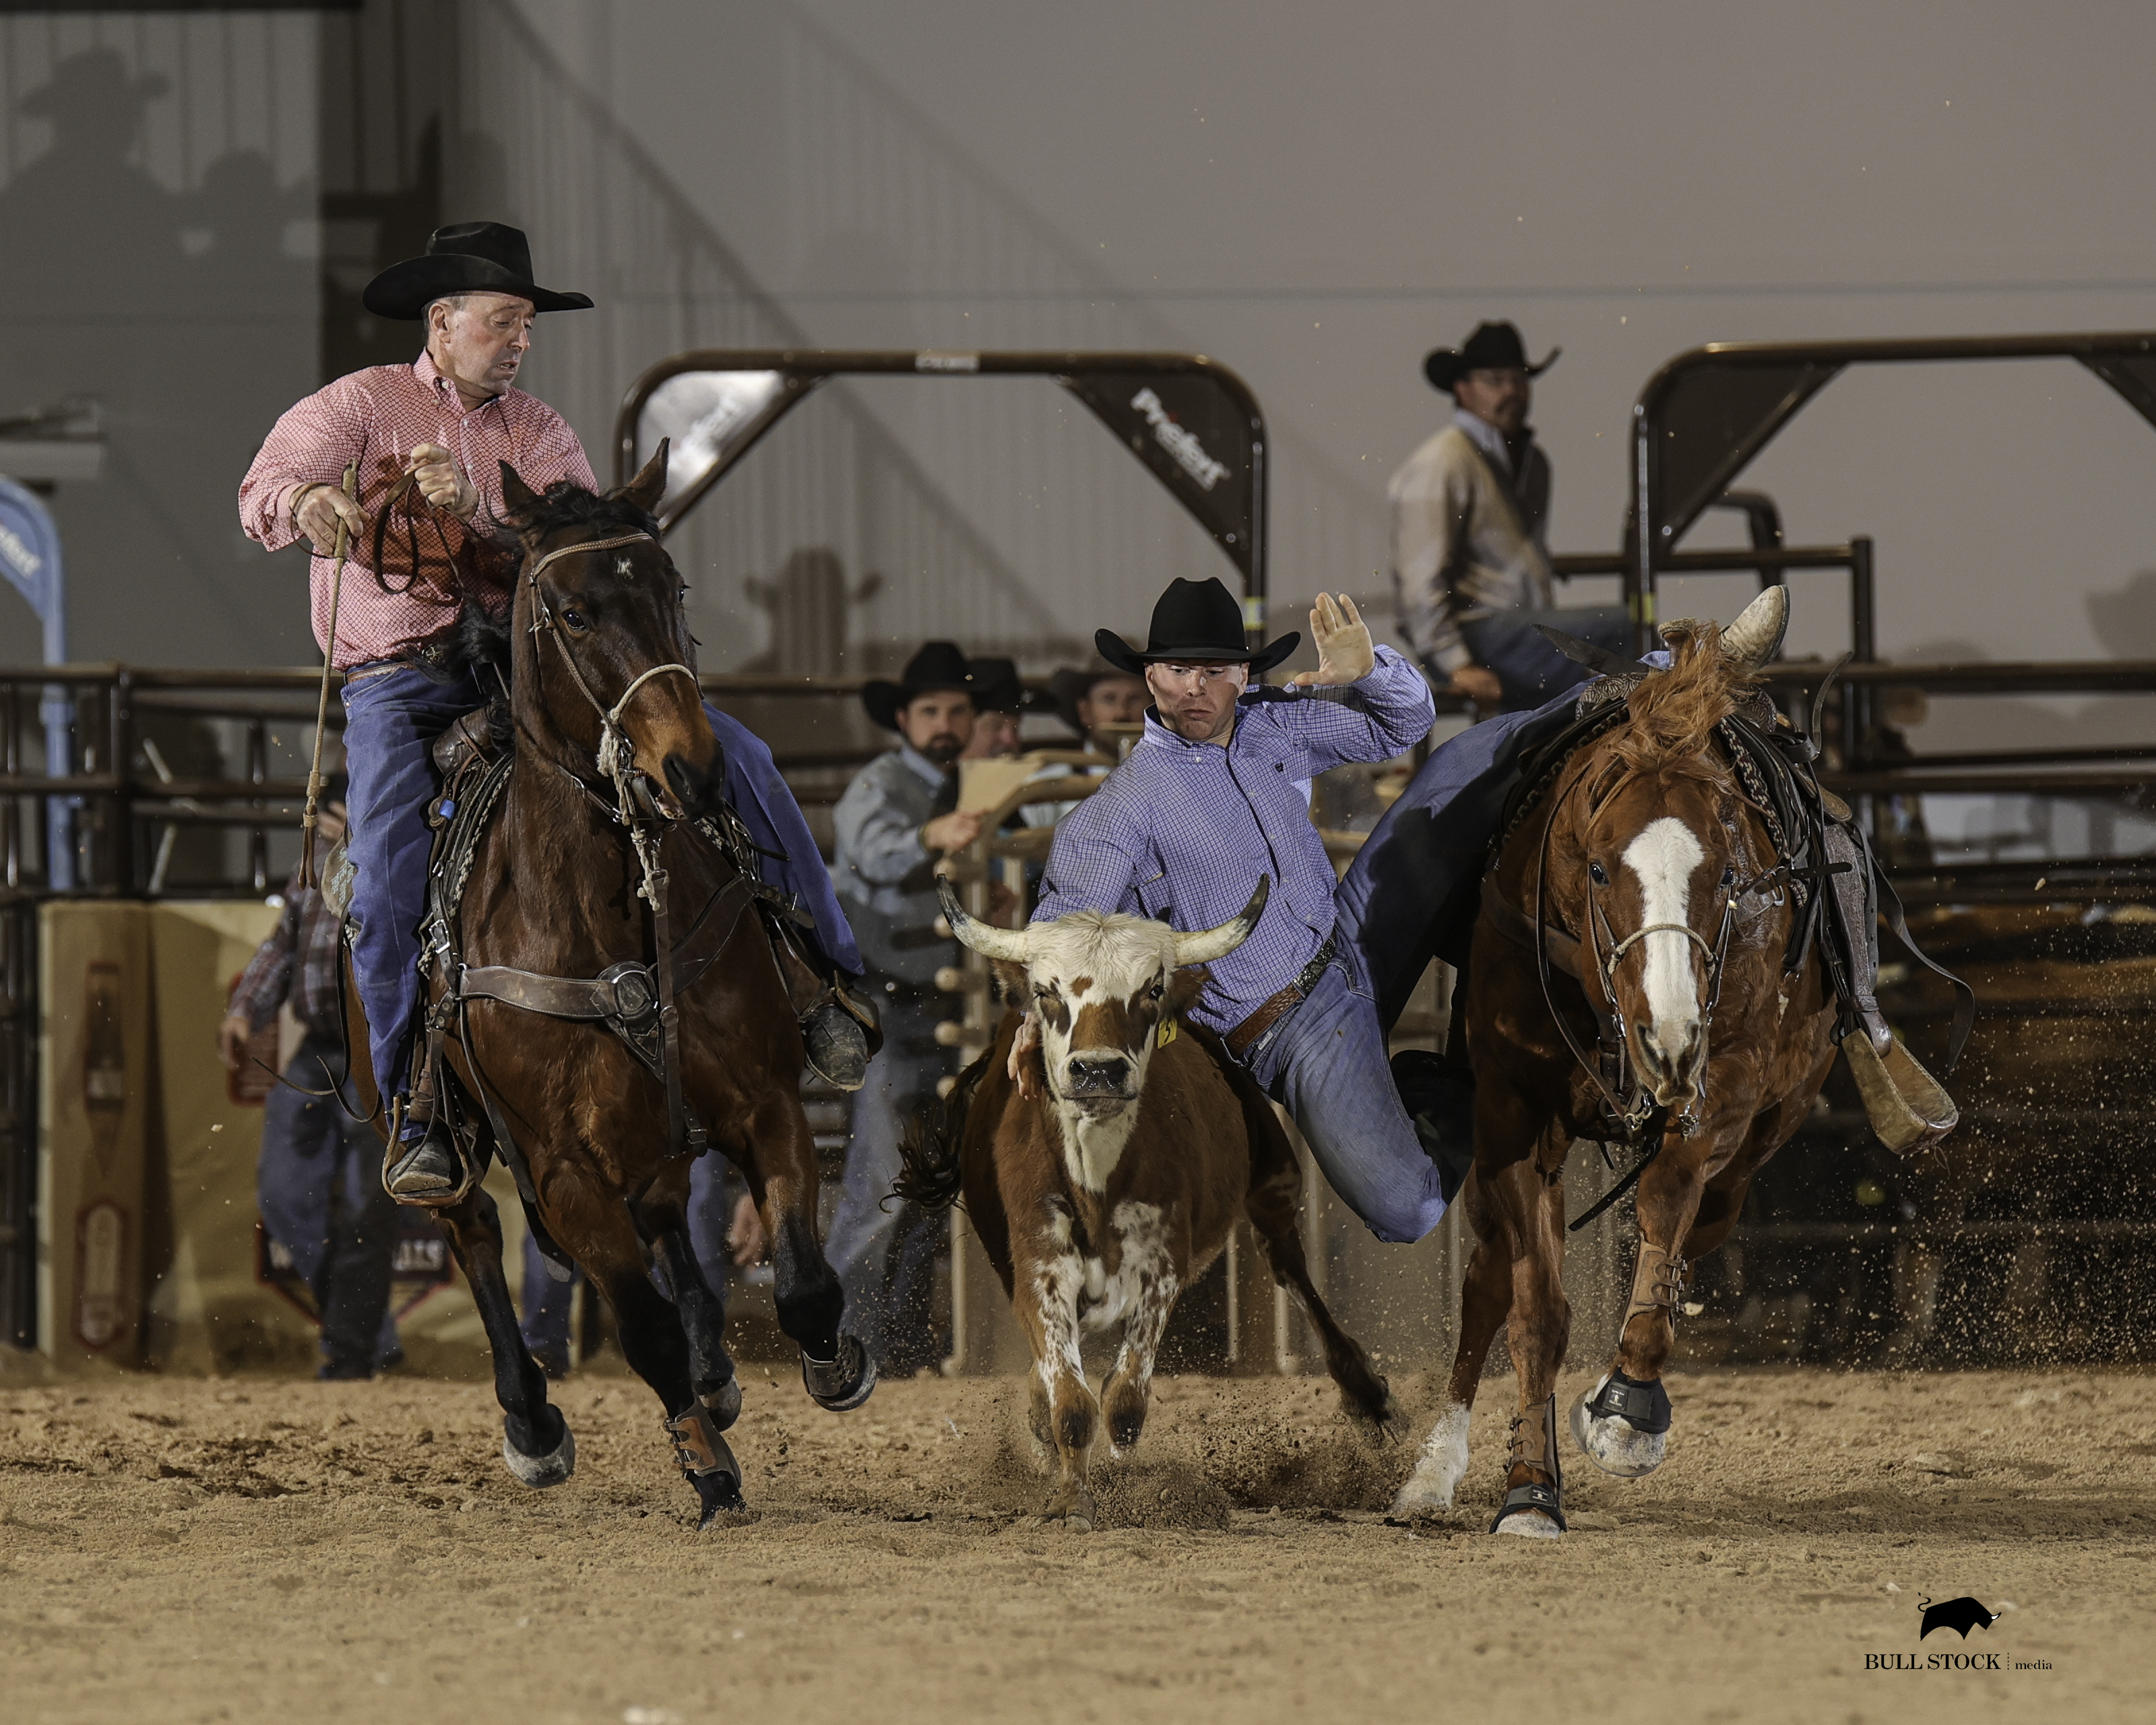 Wrangler Rodeo Arena | Features | Cowboy Christmas